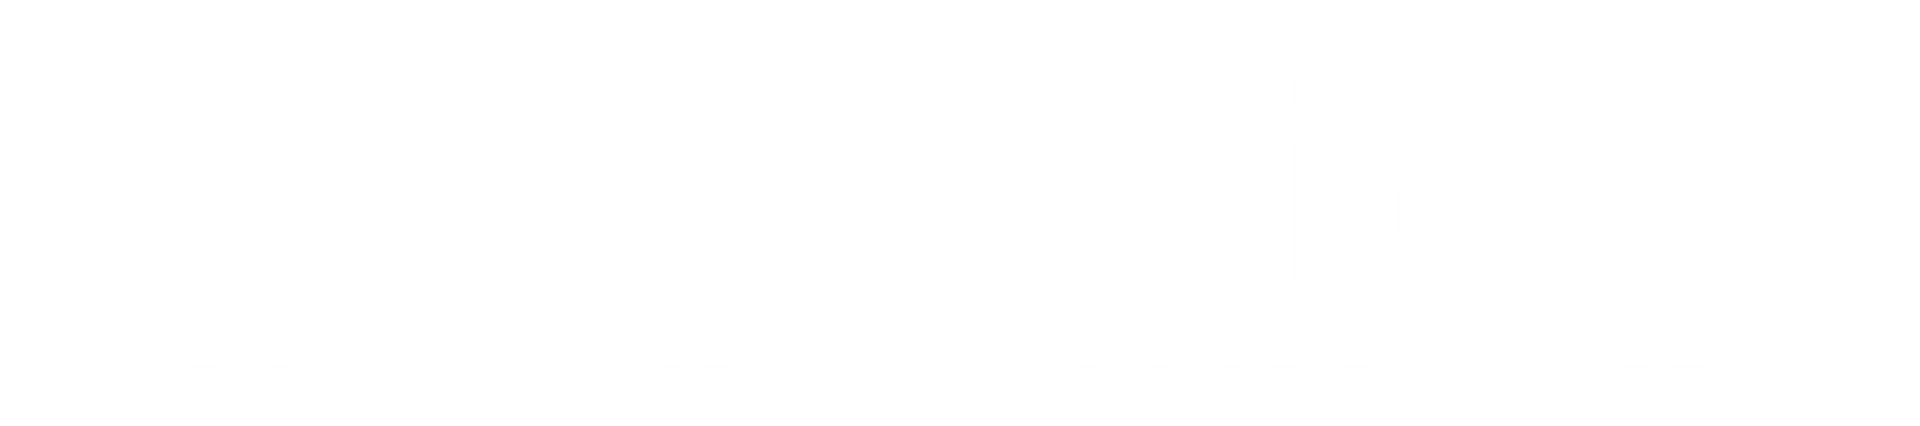 Evollusion Electronics & Accessories logo